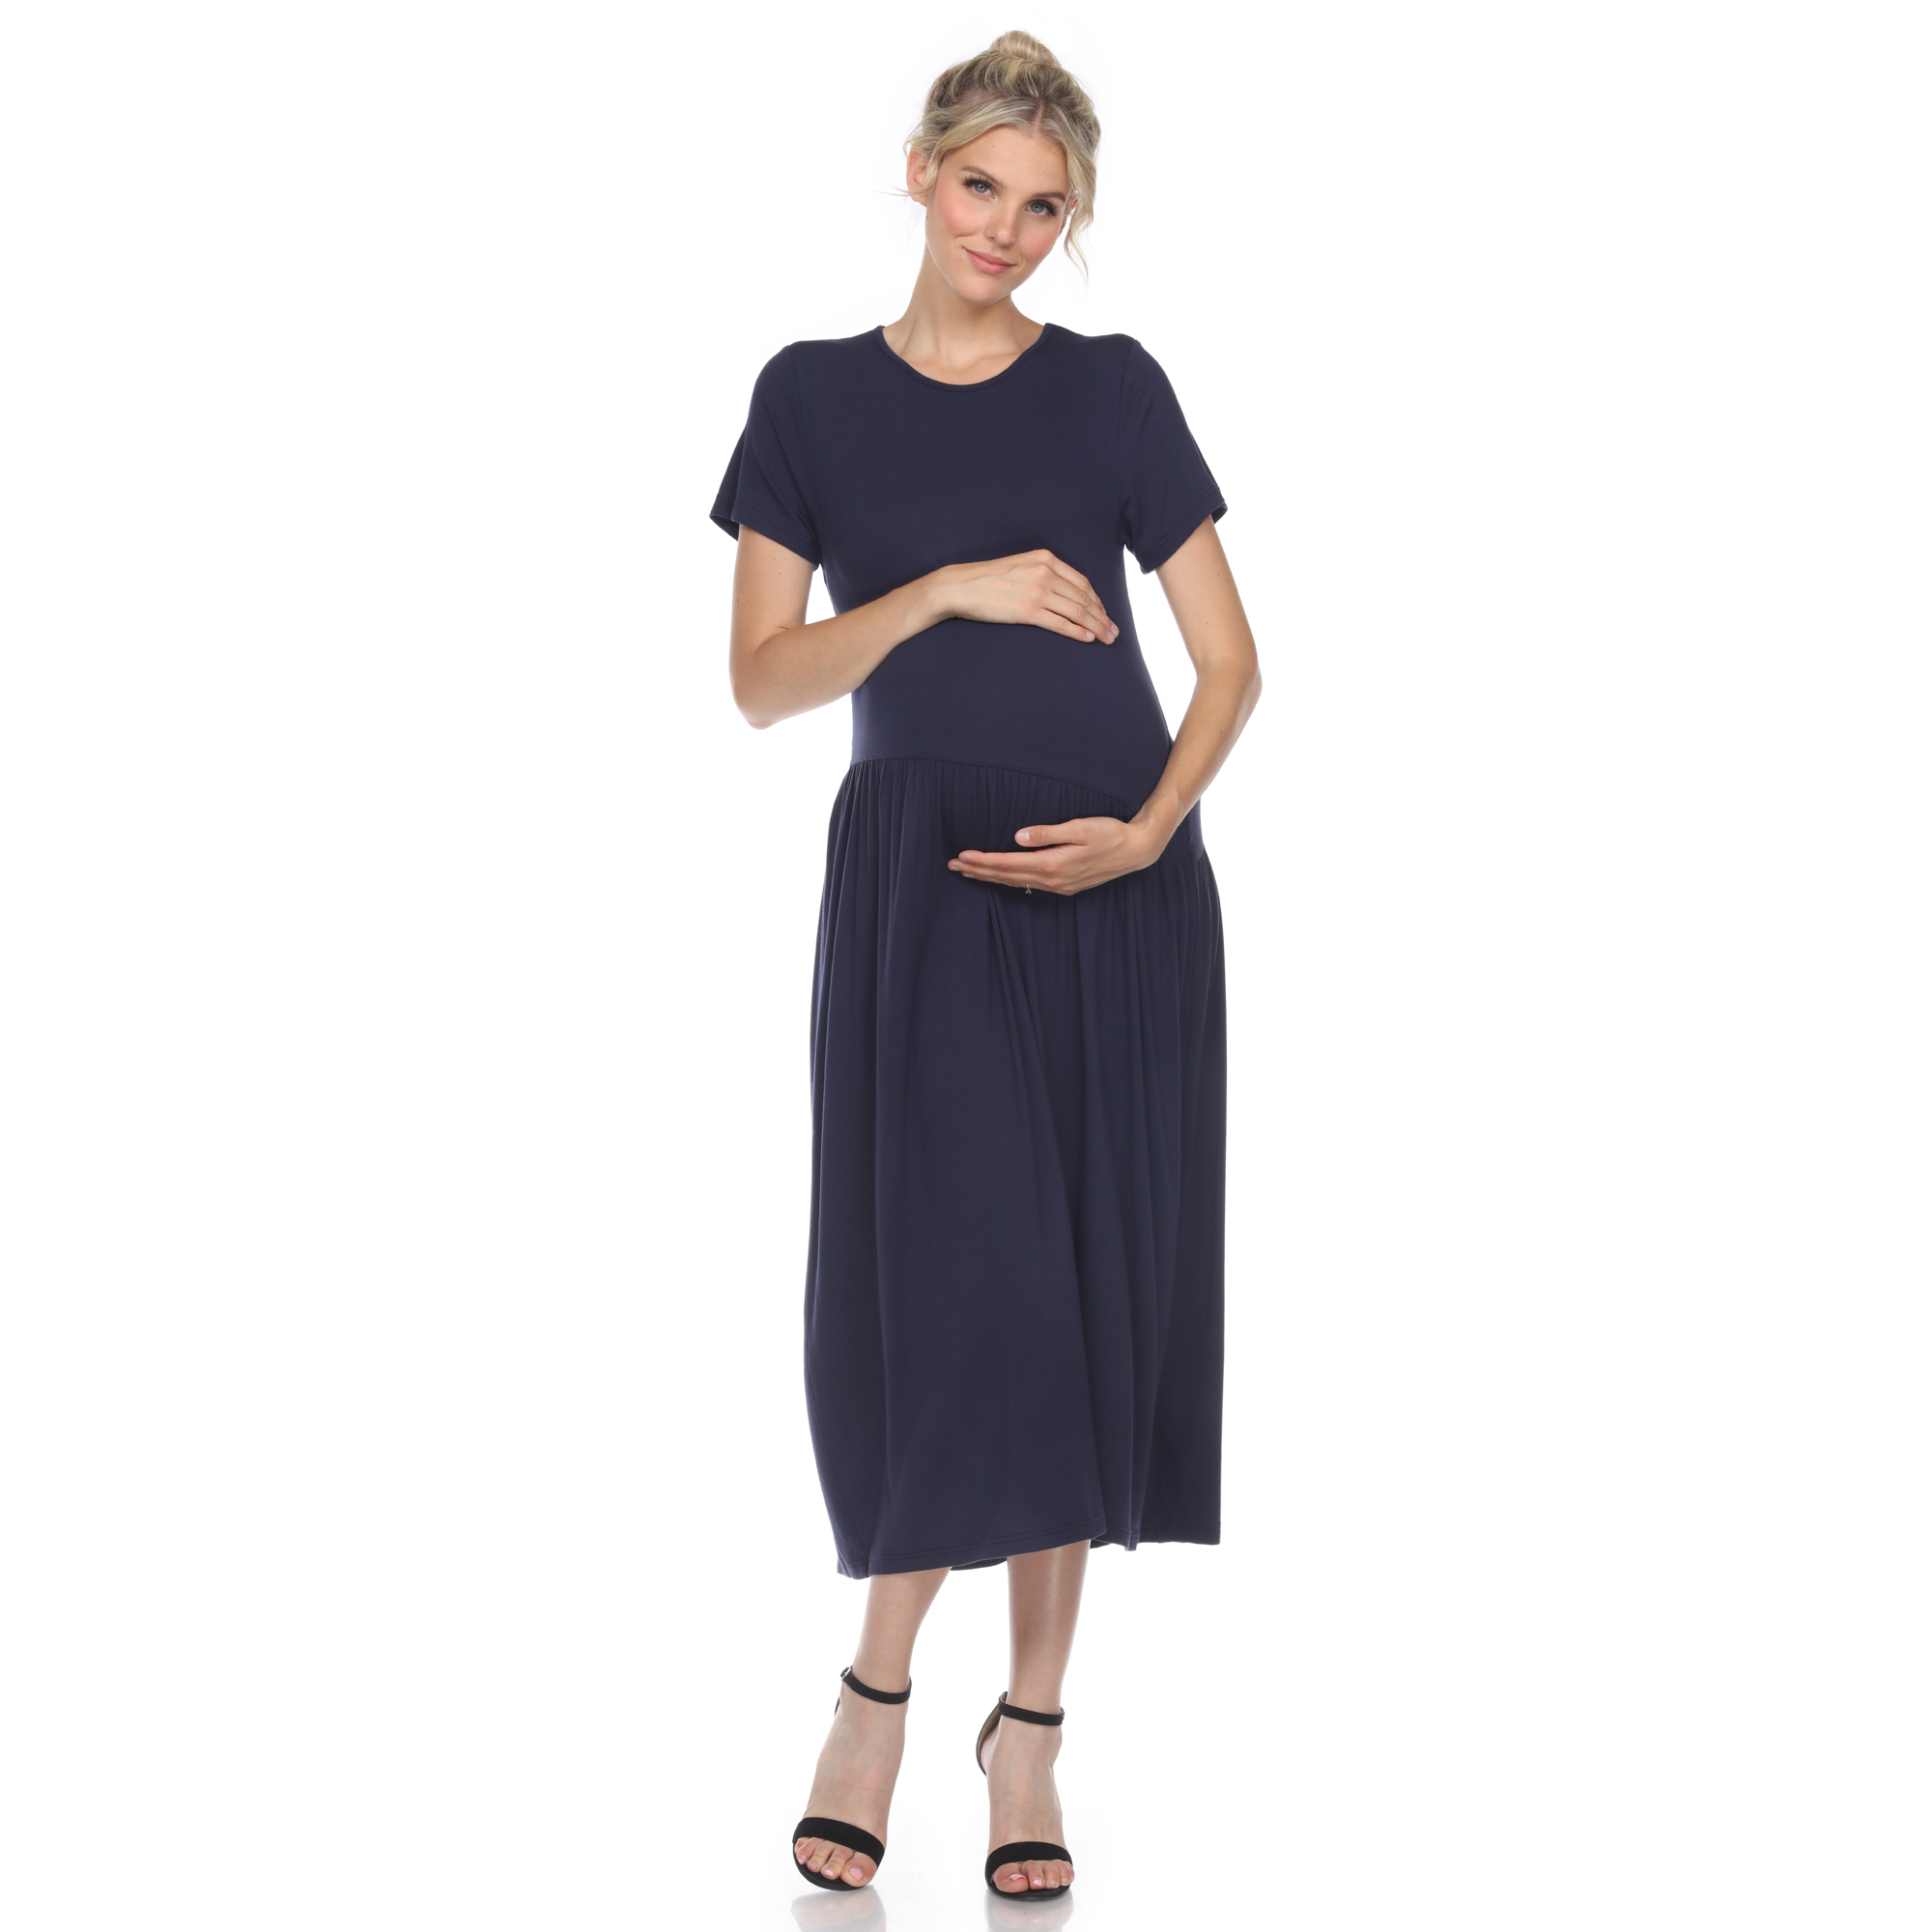 White Mark Womenâs Maternity Short Sleeve Maxi Dress - Navy, X-Large